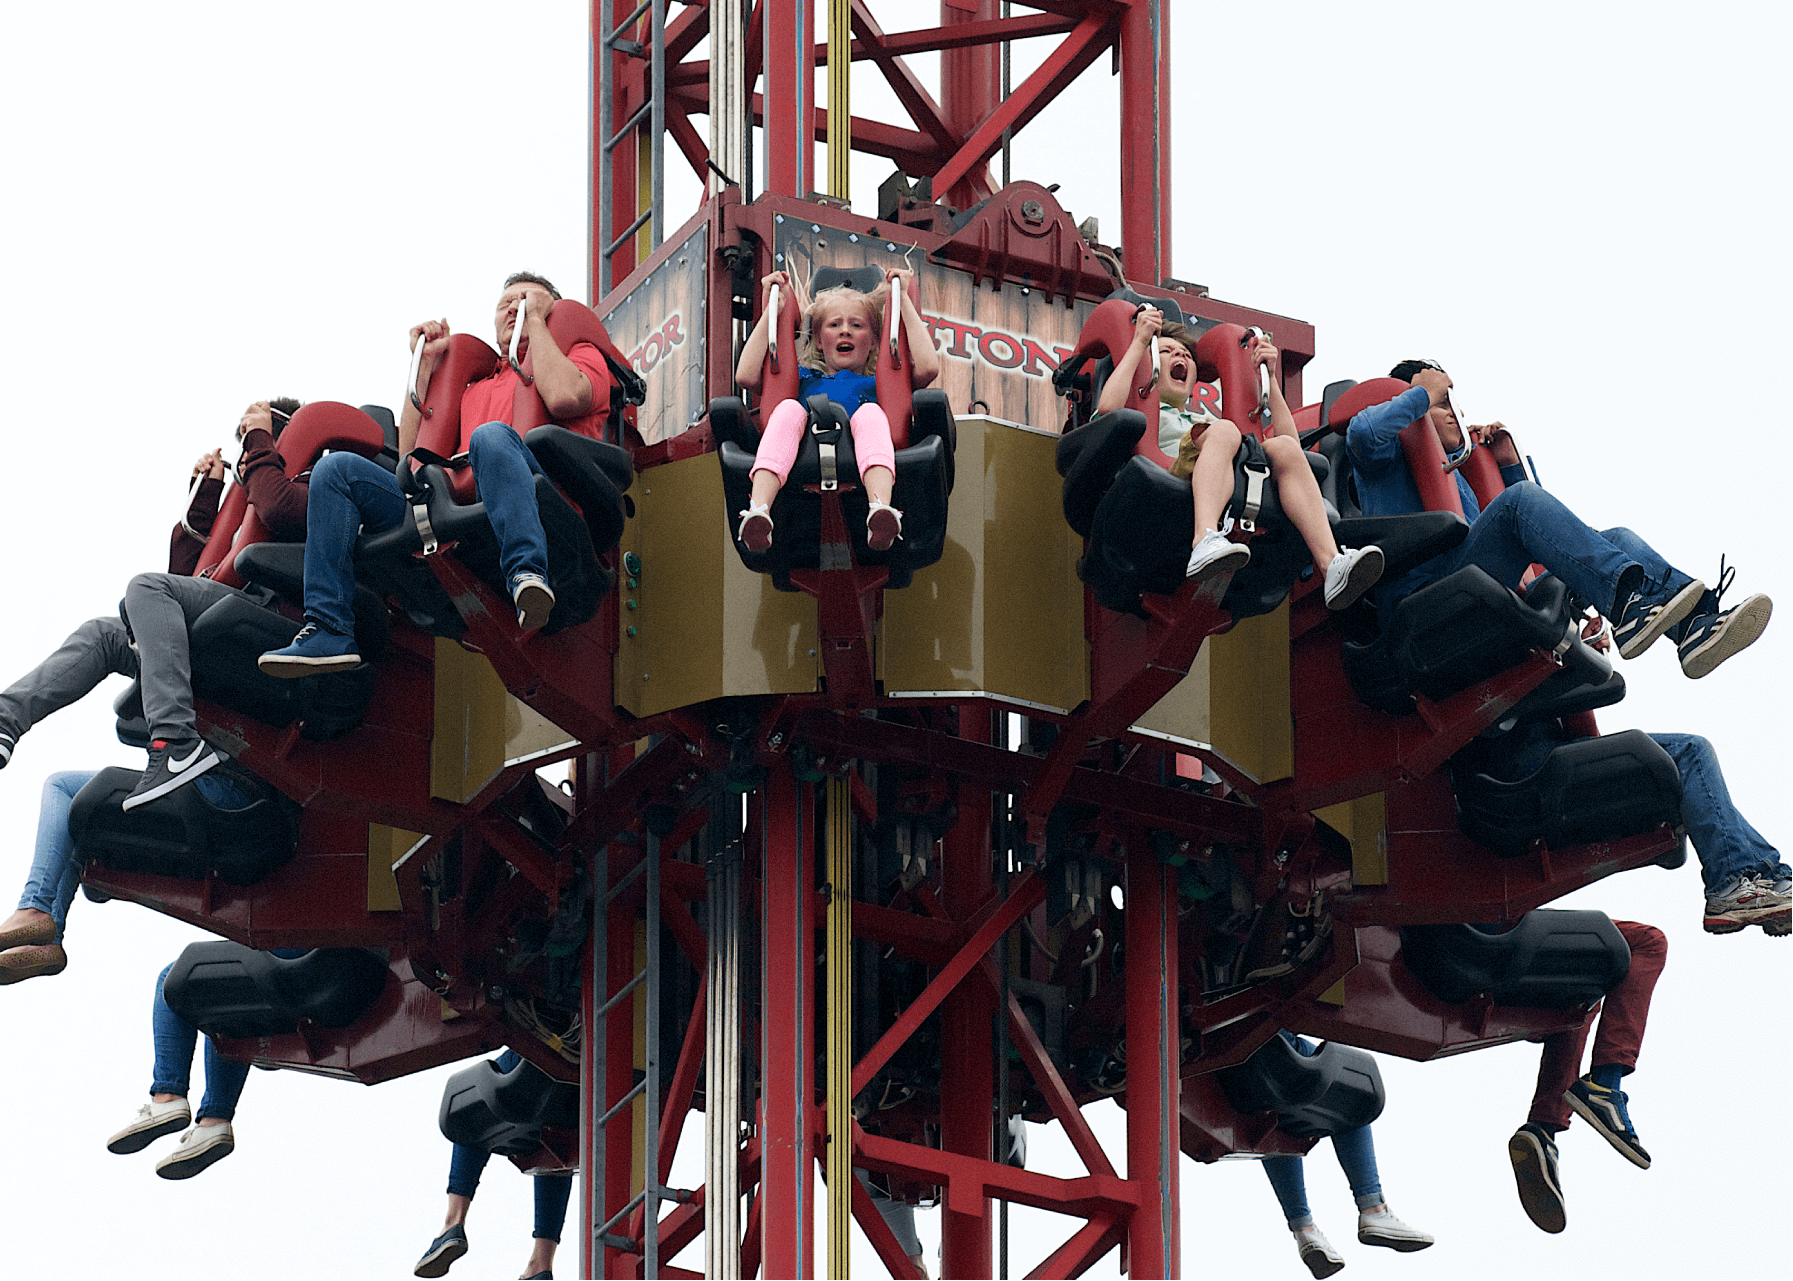 Detonator Drop Tower Ride Thorpe Park Closeup of Guests